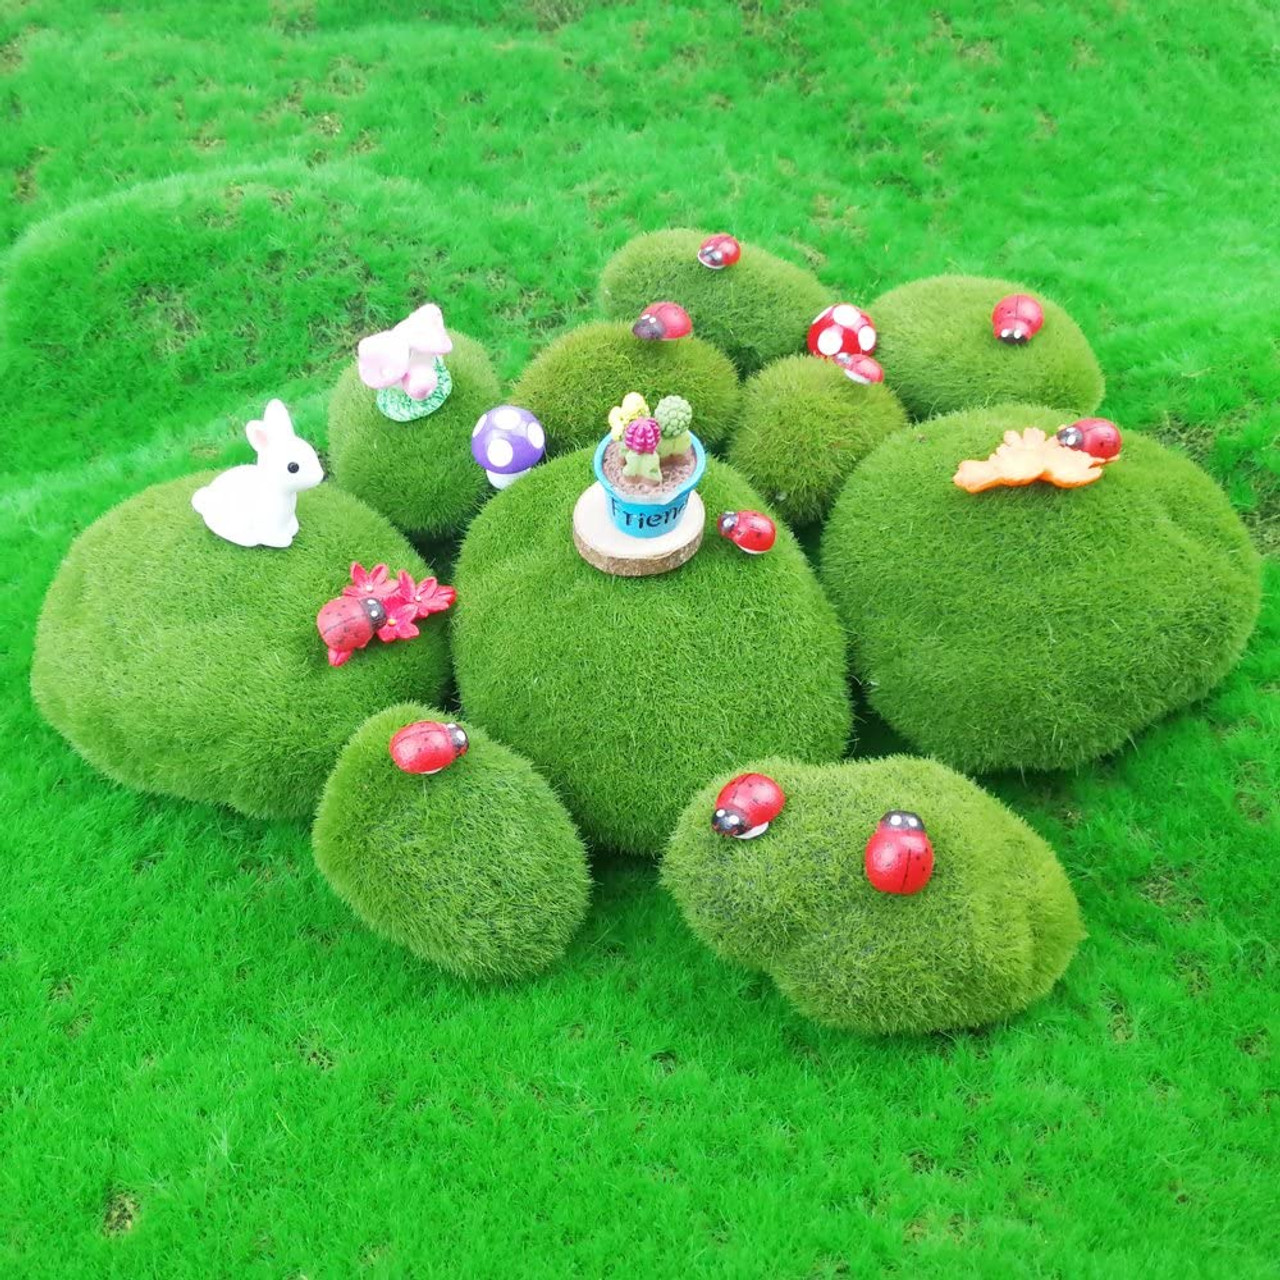 Miniature Fairy Garden Faux Moss Rocks - Set of 10 - Buy 3 Save $5